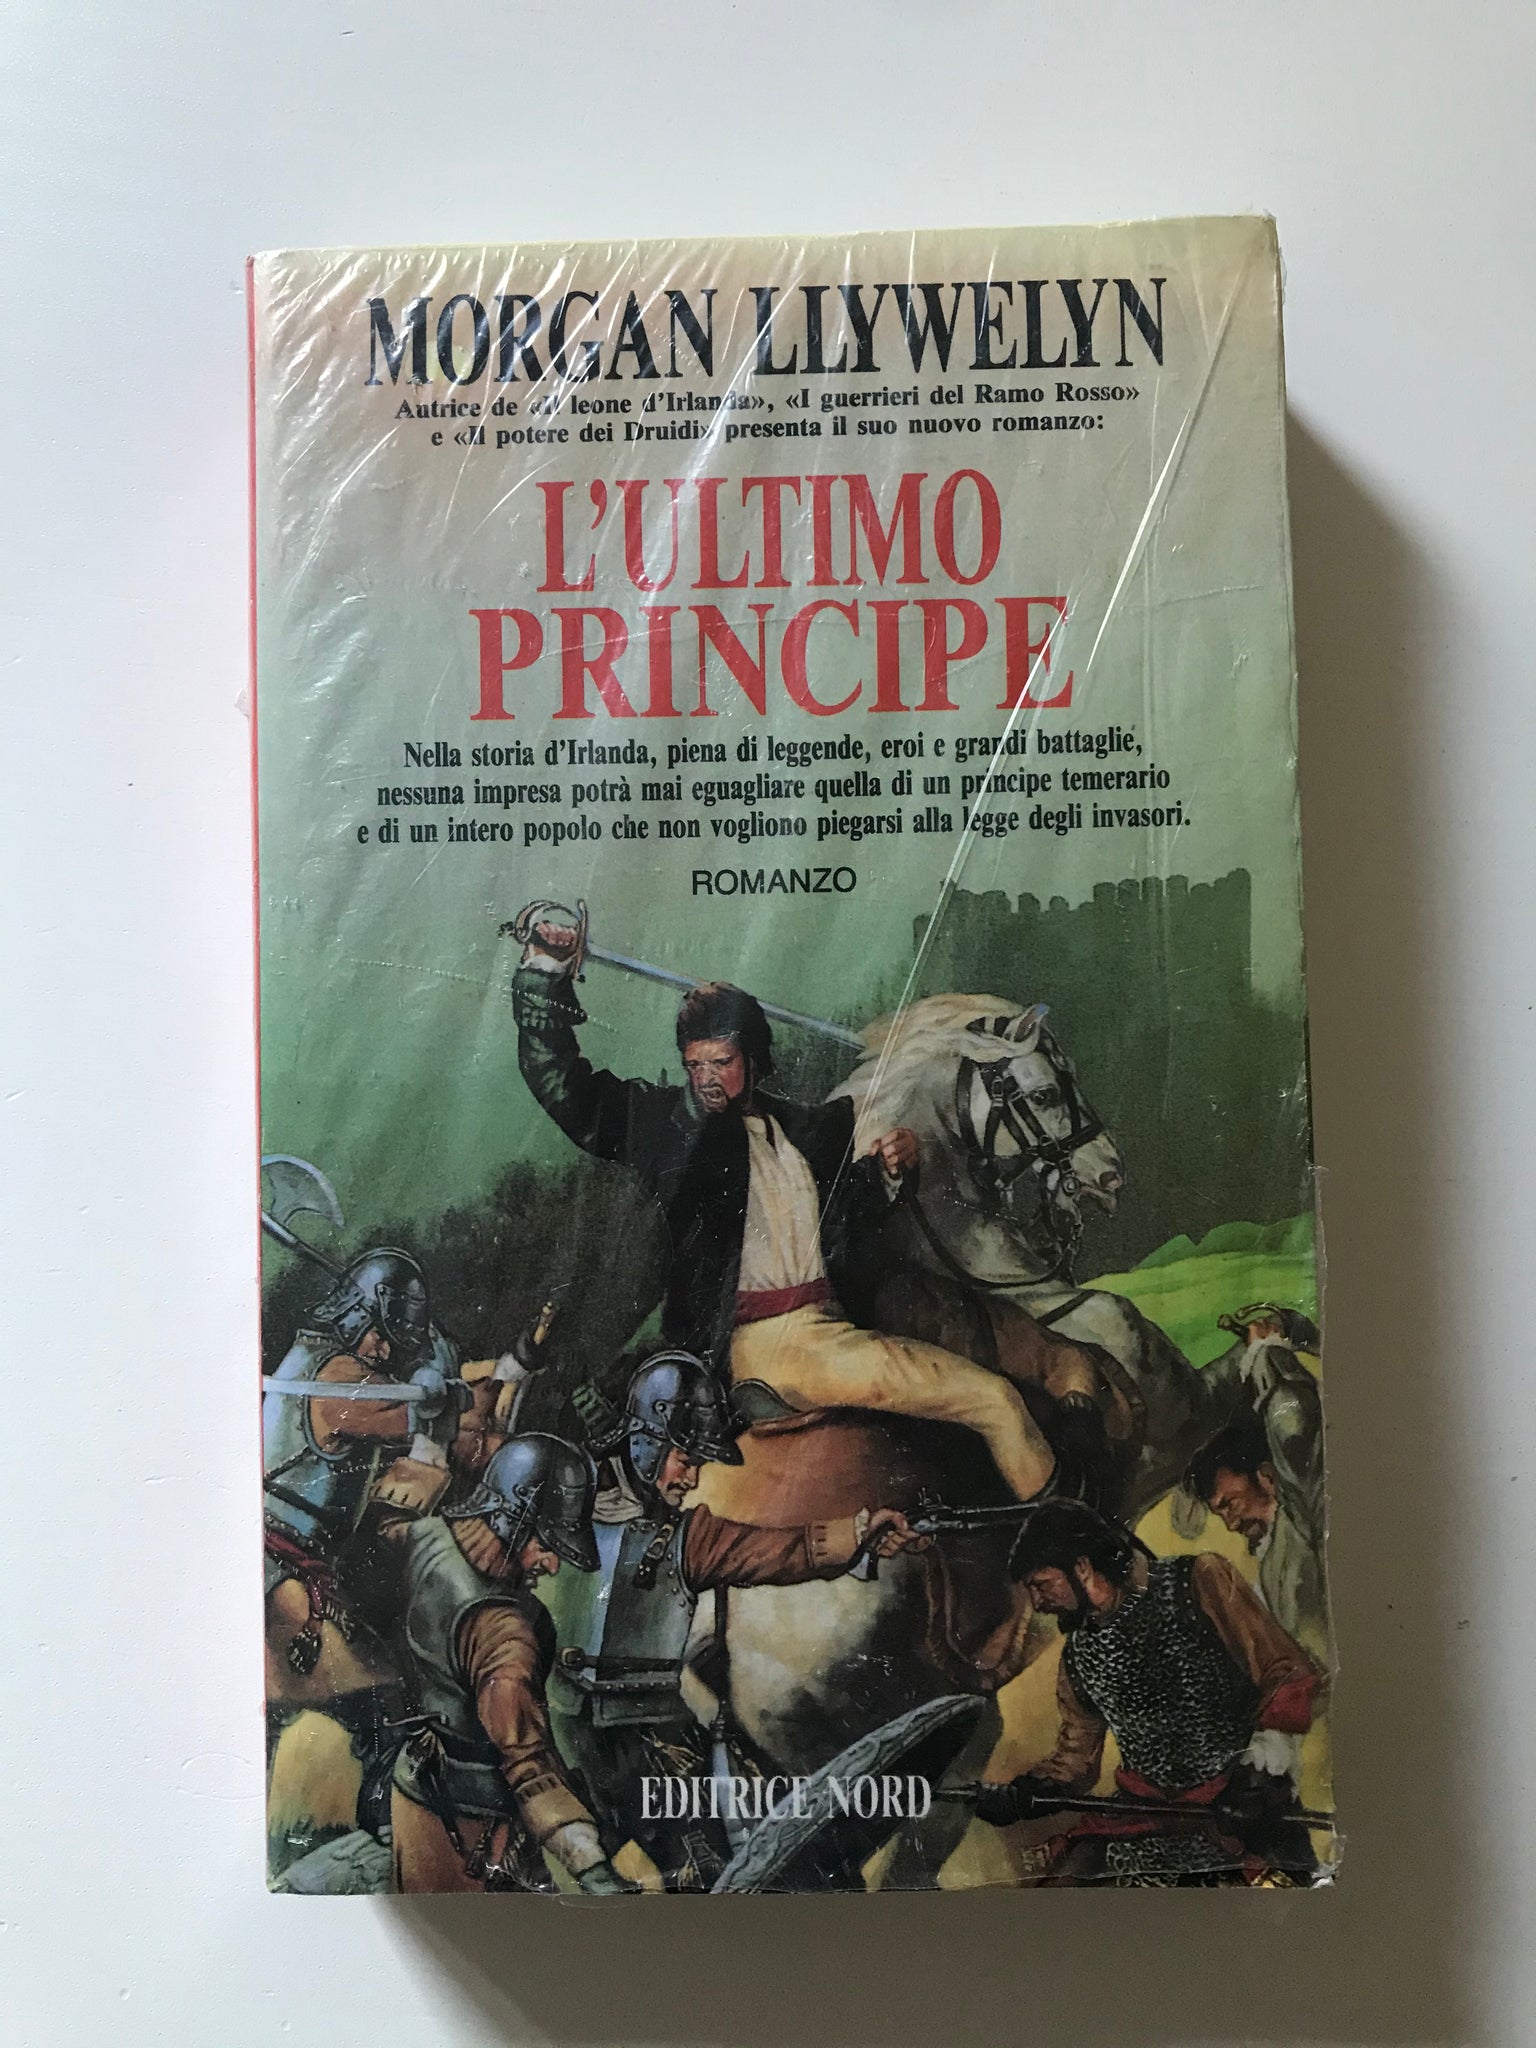 Morgan Llywelyn - L'ultimo principe